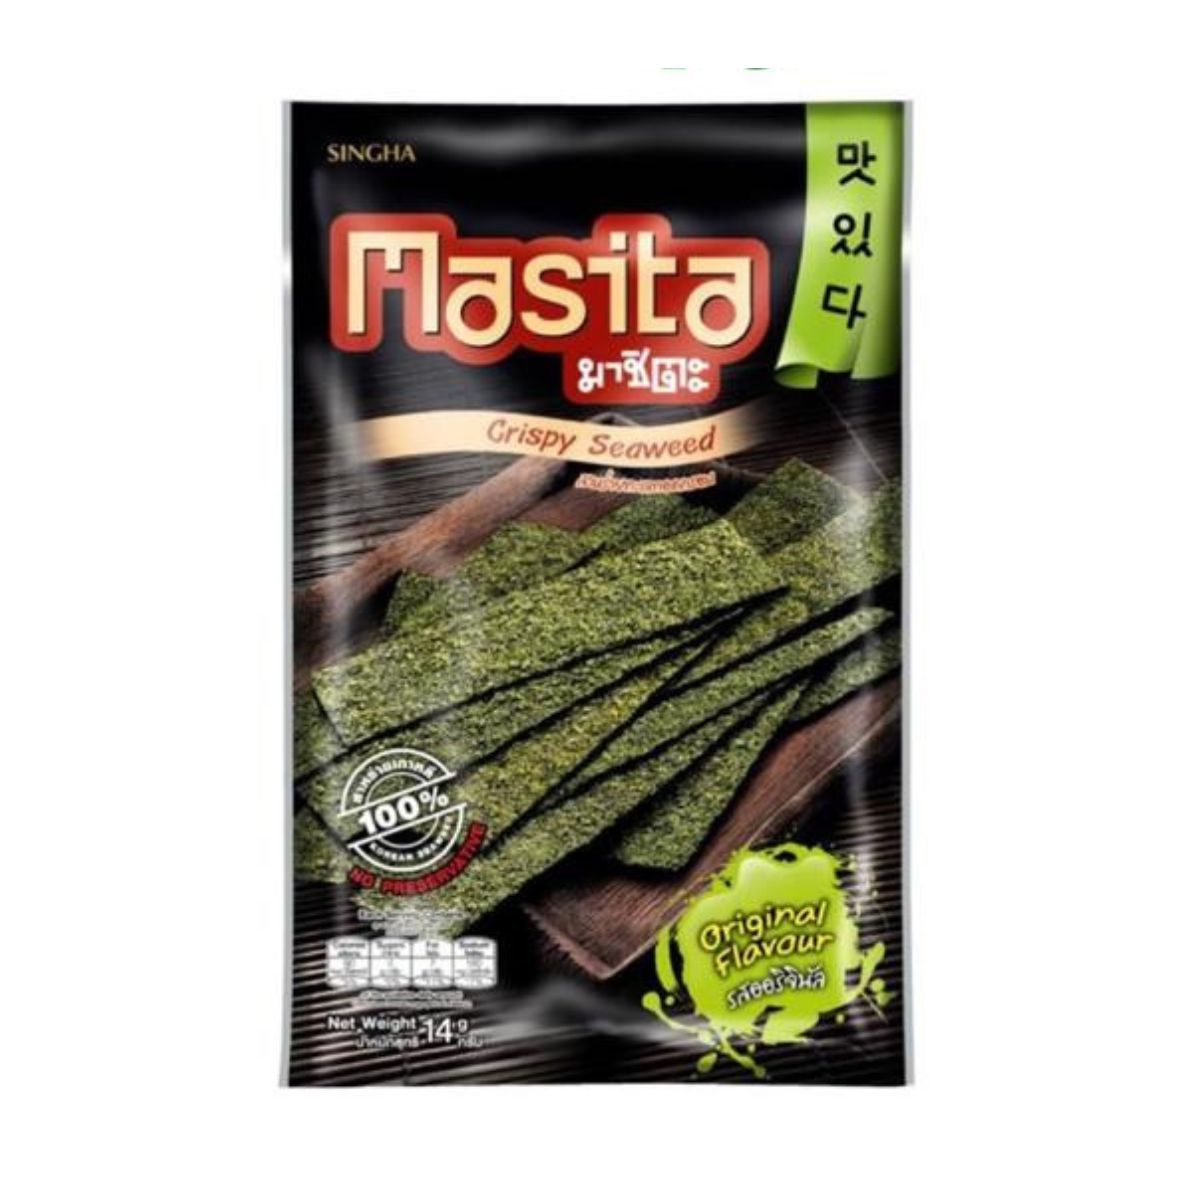 Masita - Crispy Seaweed - Original Flavour - 14g